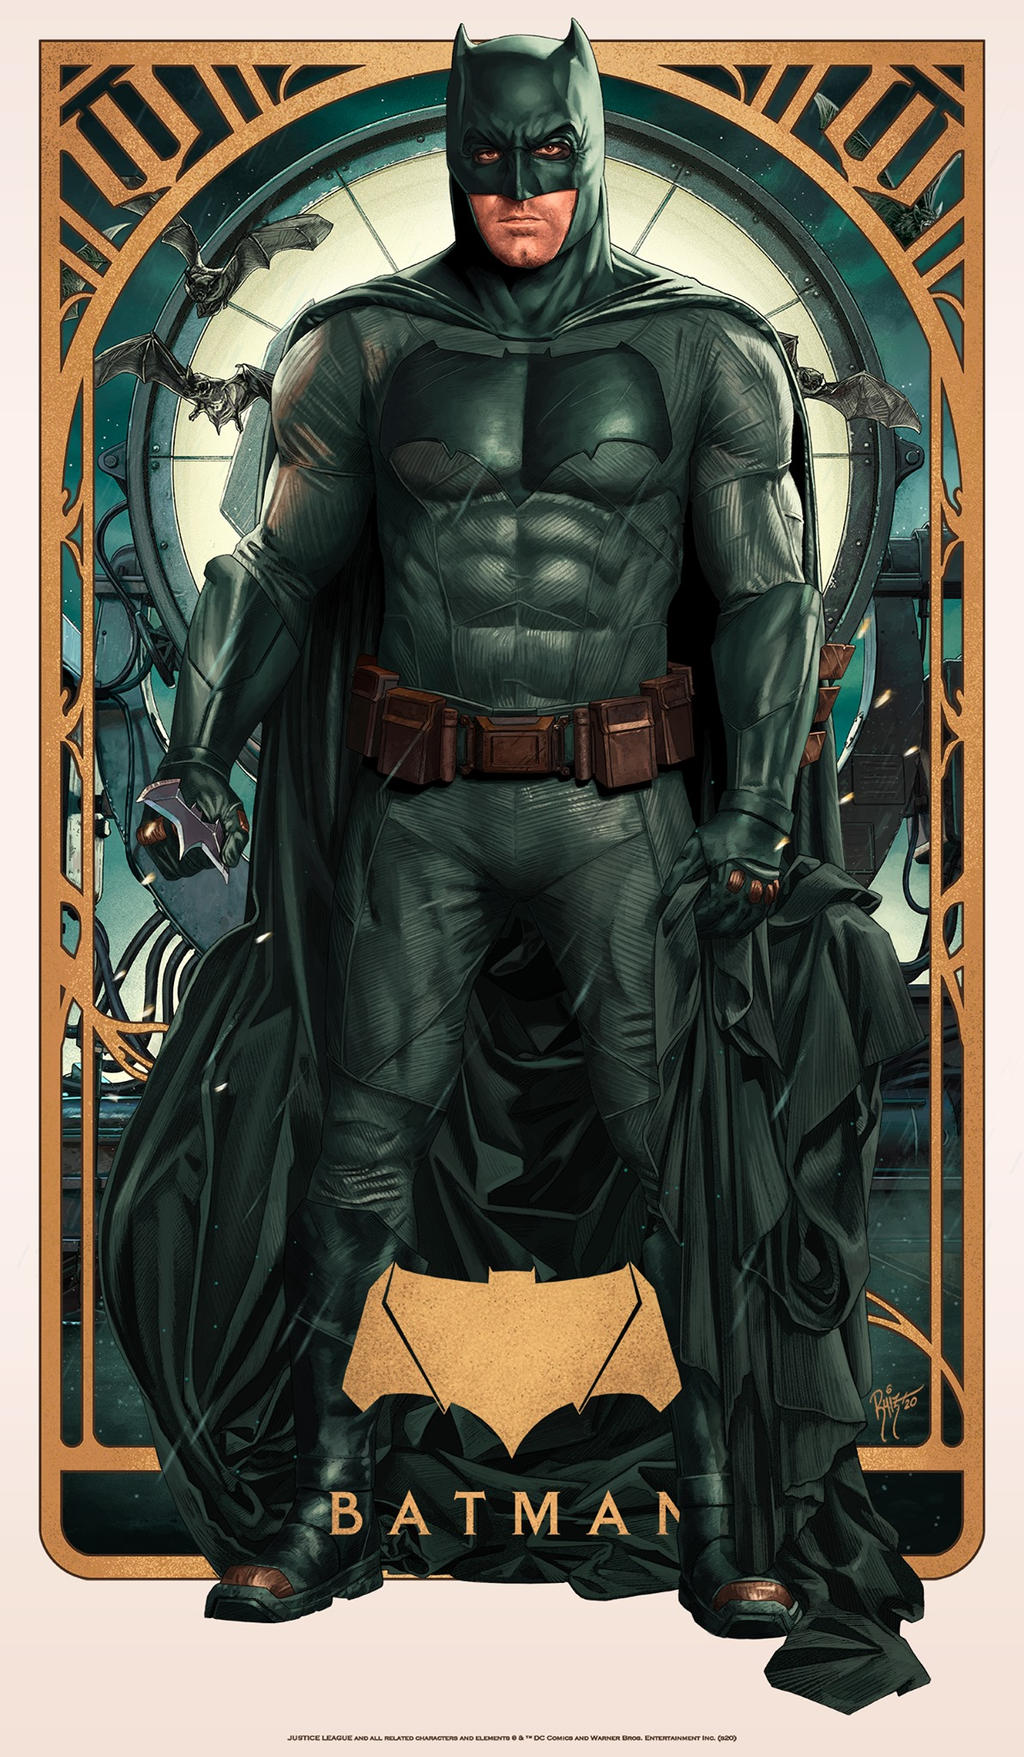 Batman Ben Affleck art by BatmanMoumen on DeviantArt